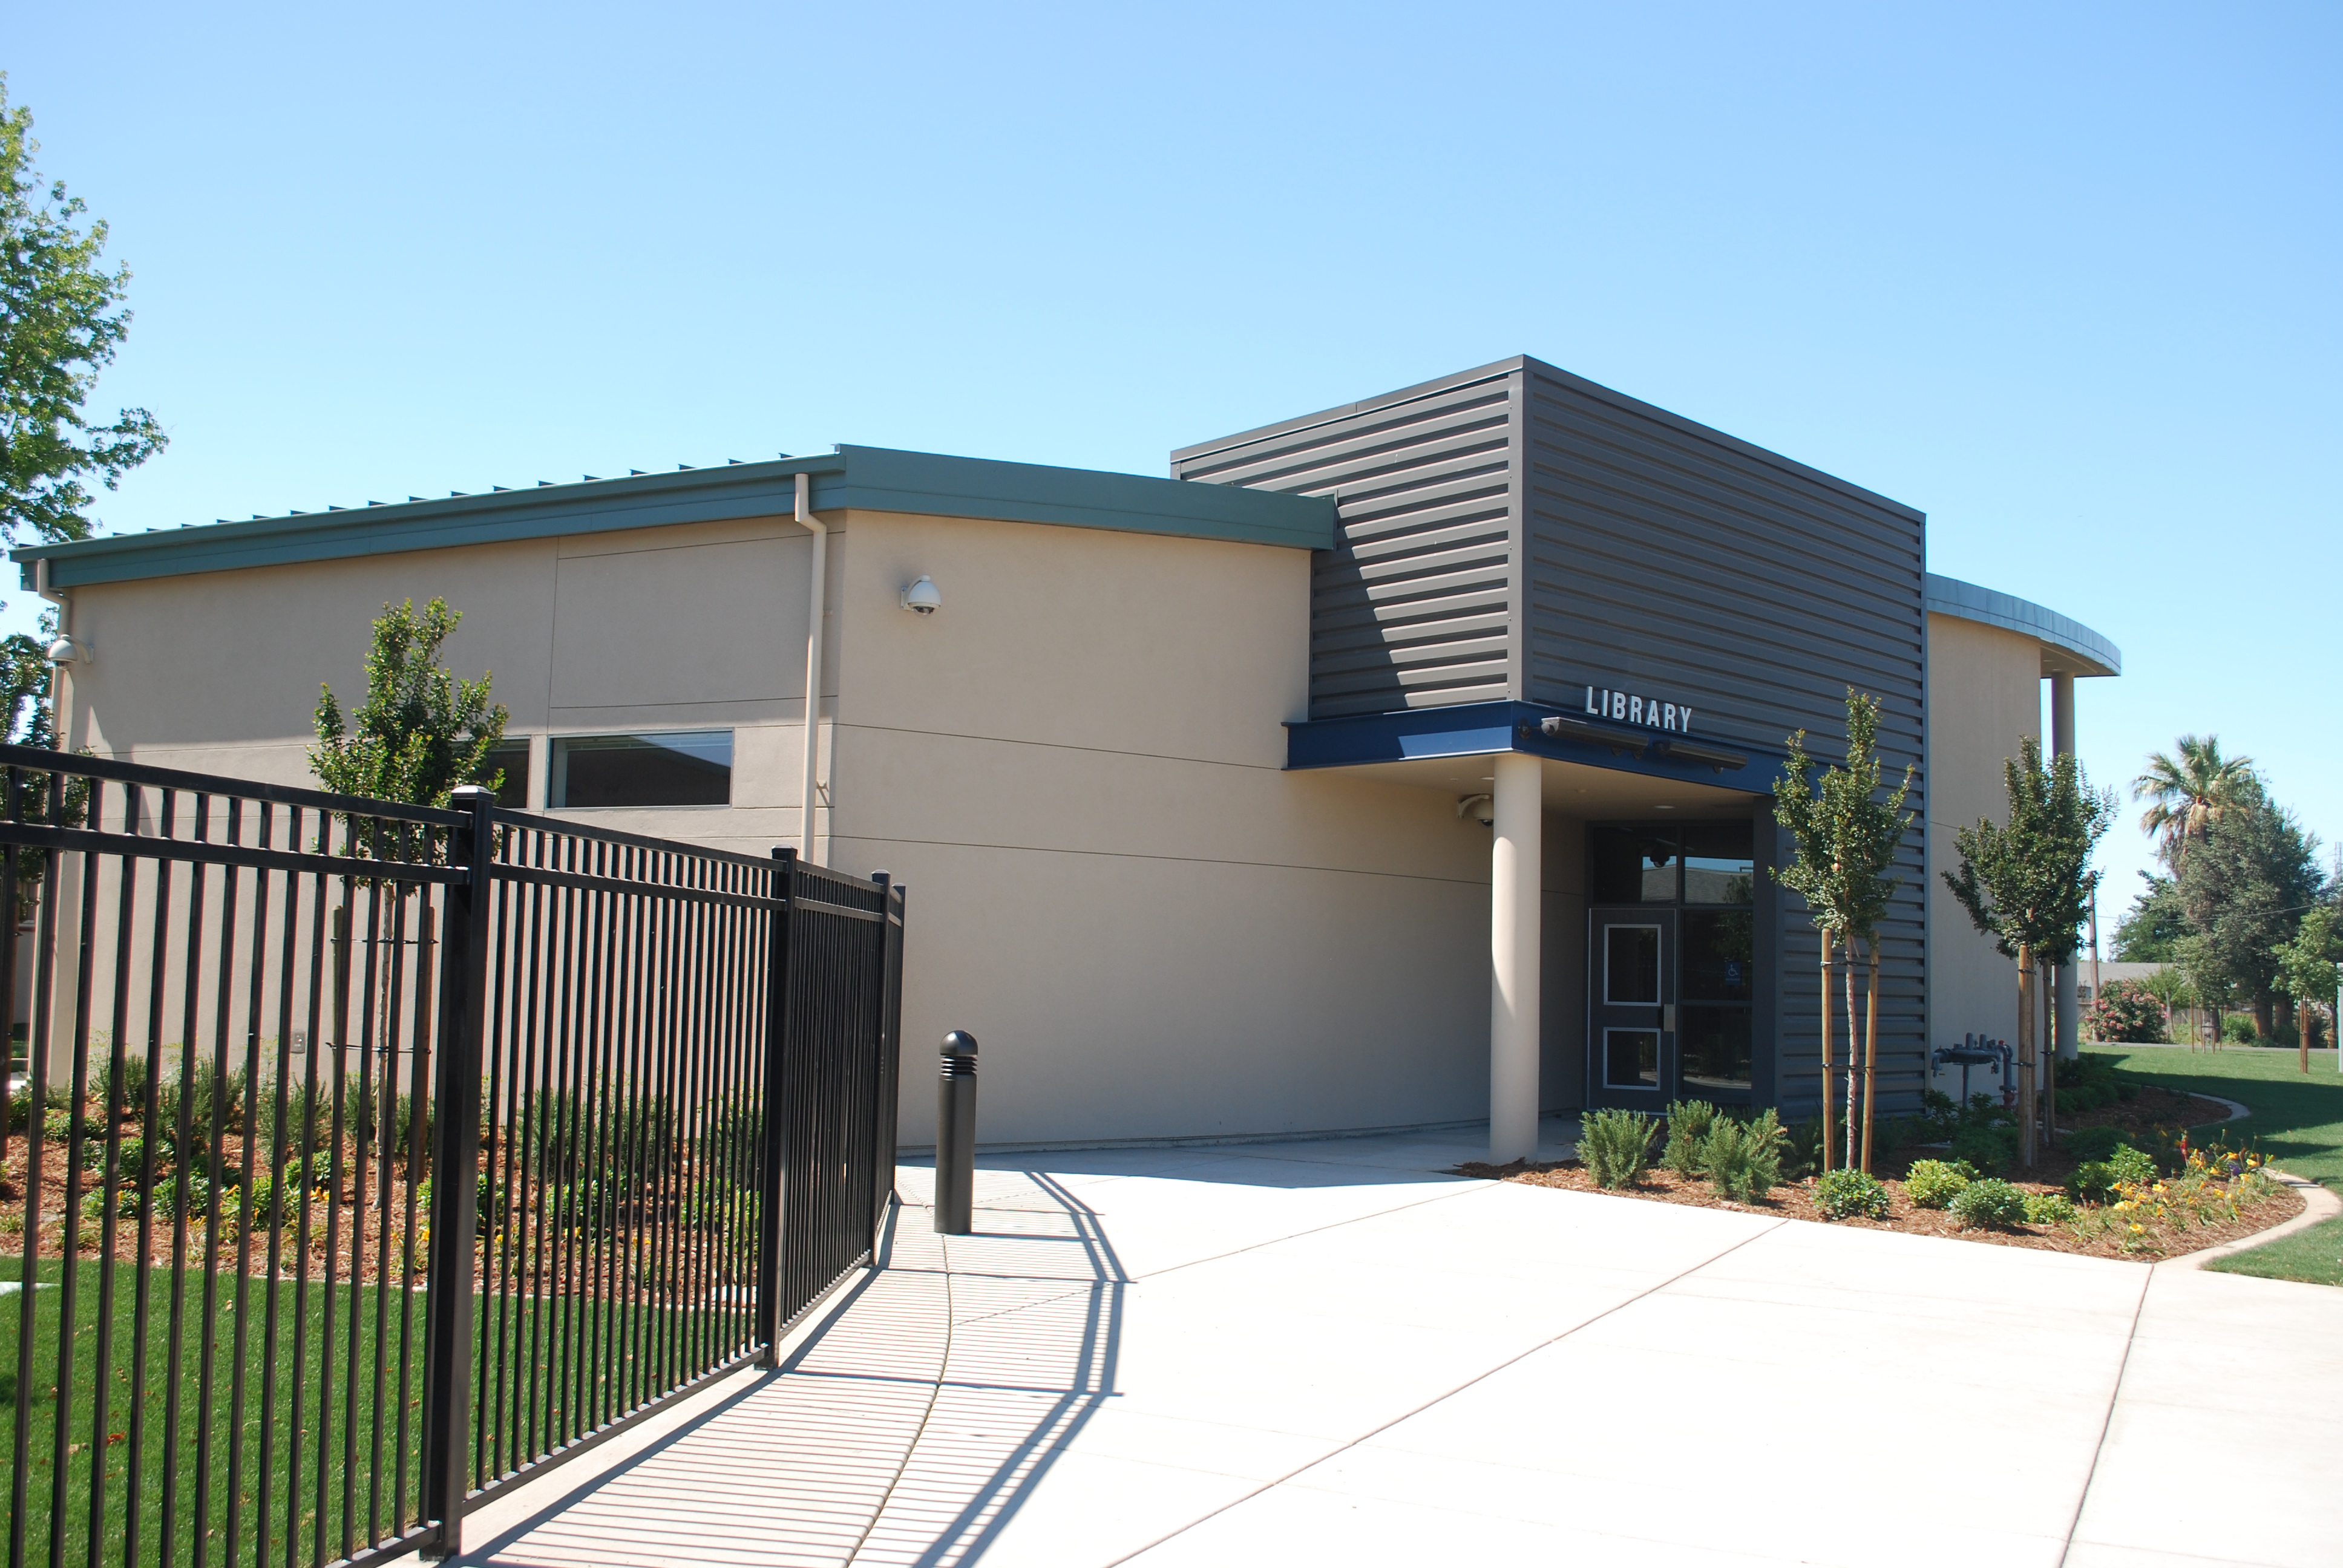 Yuba Gardens Gym and Library - Marysville, CA